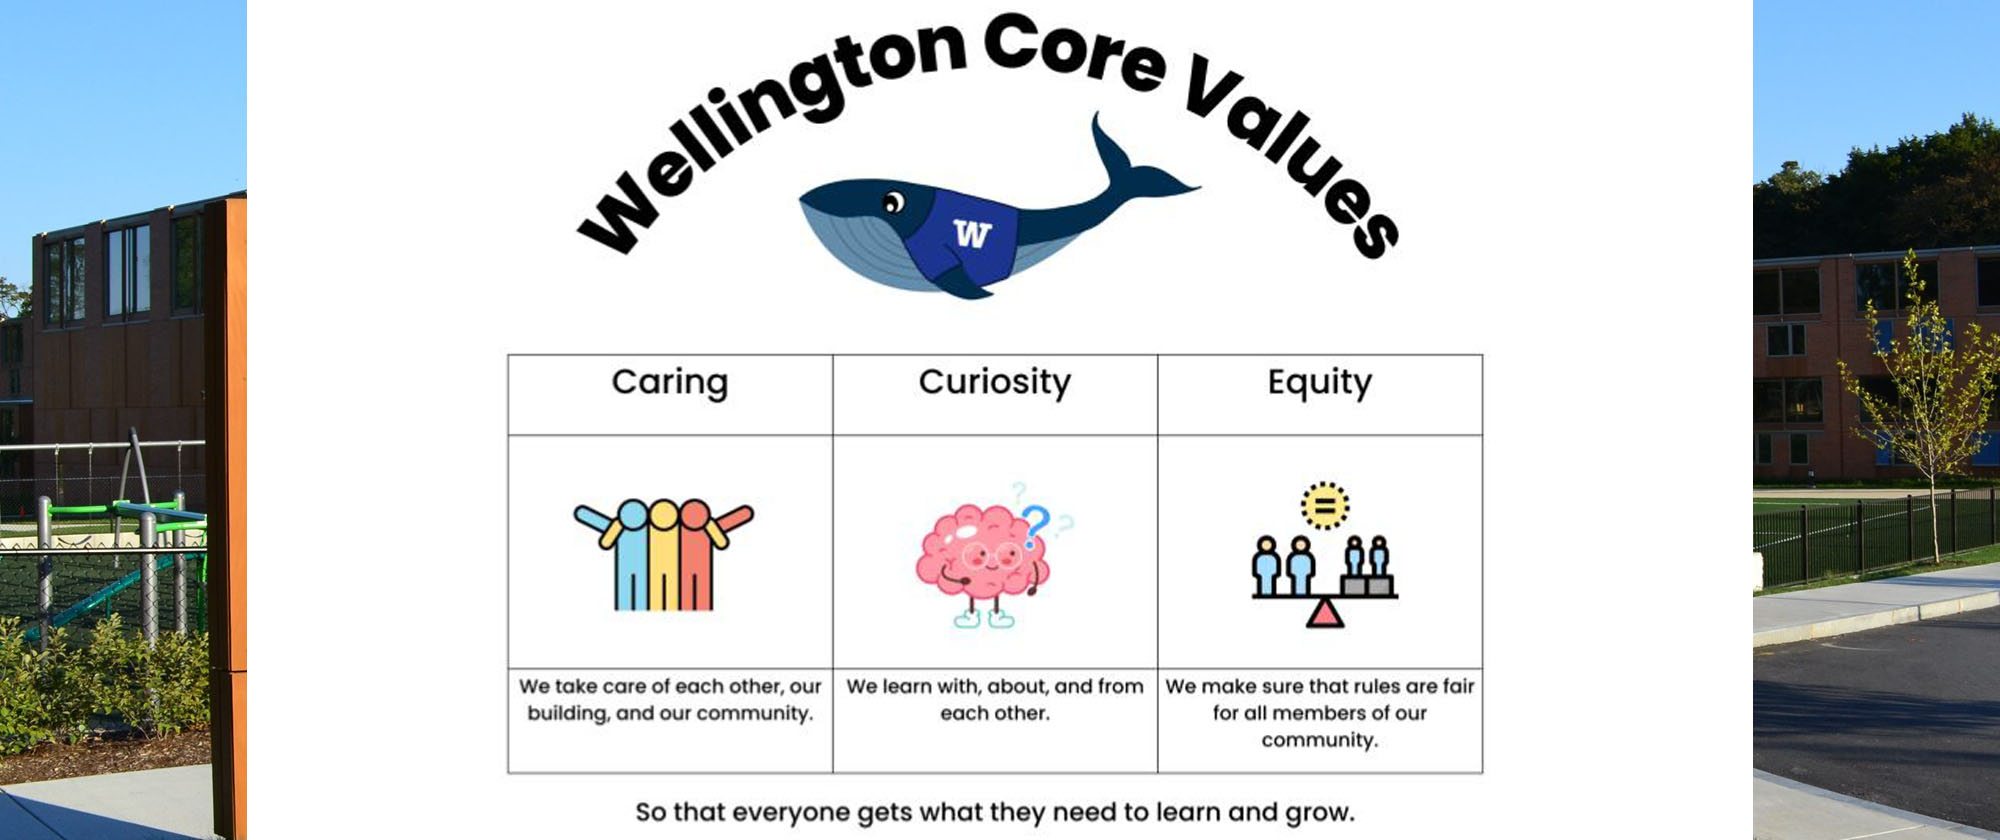 Wellington Core Values